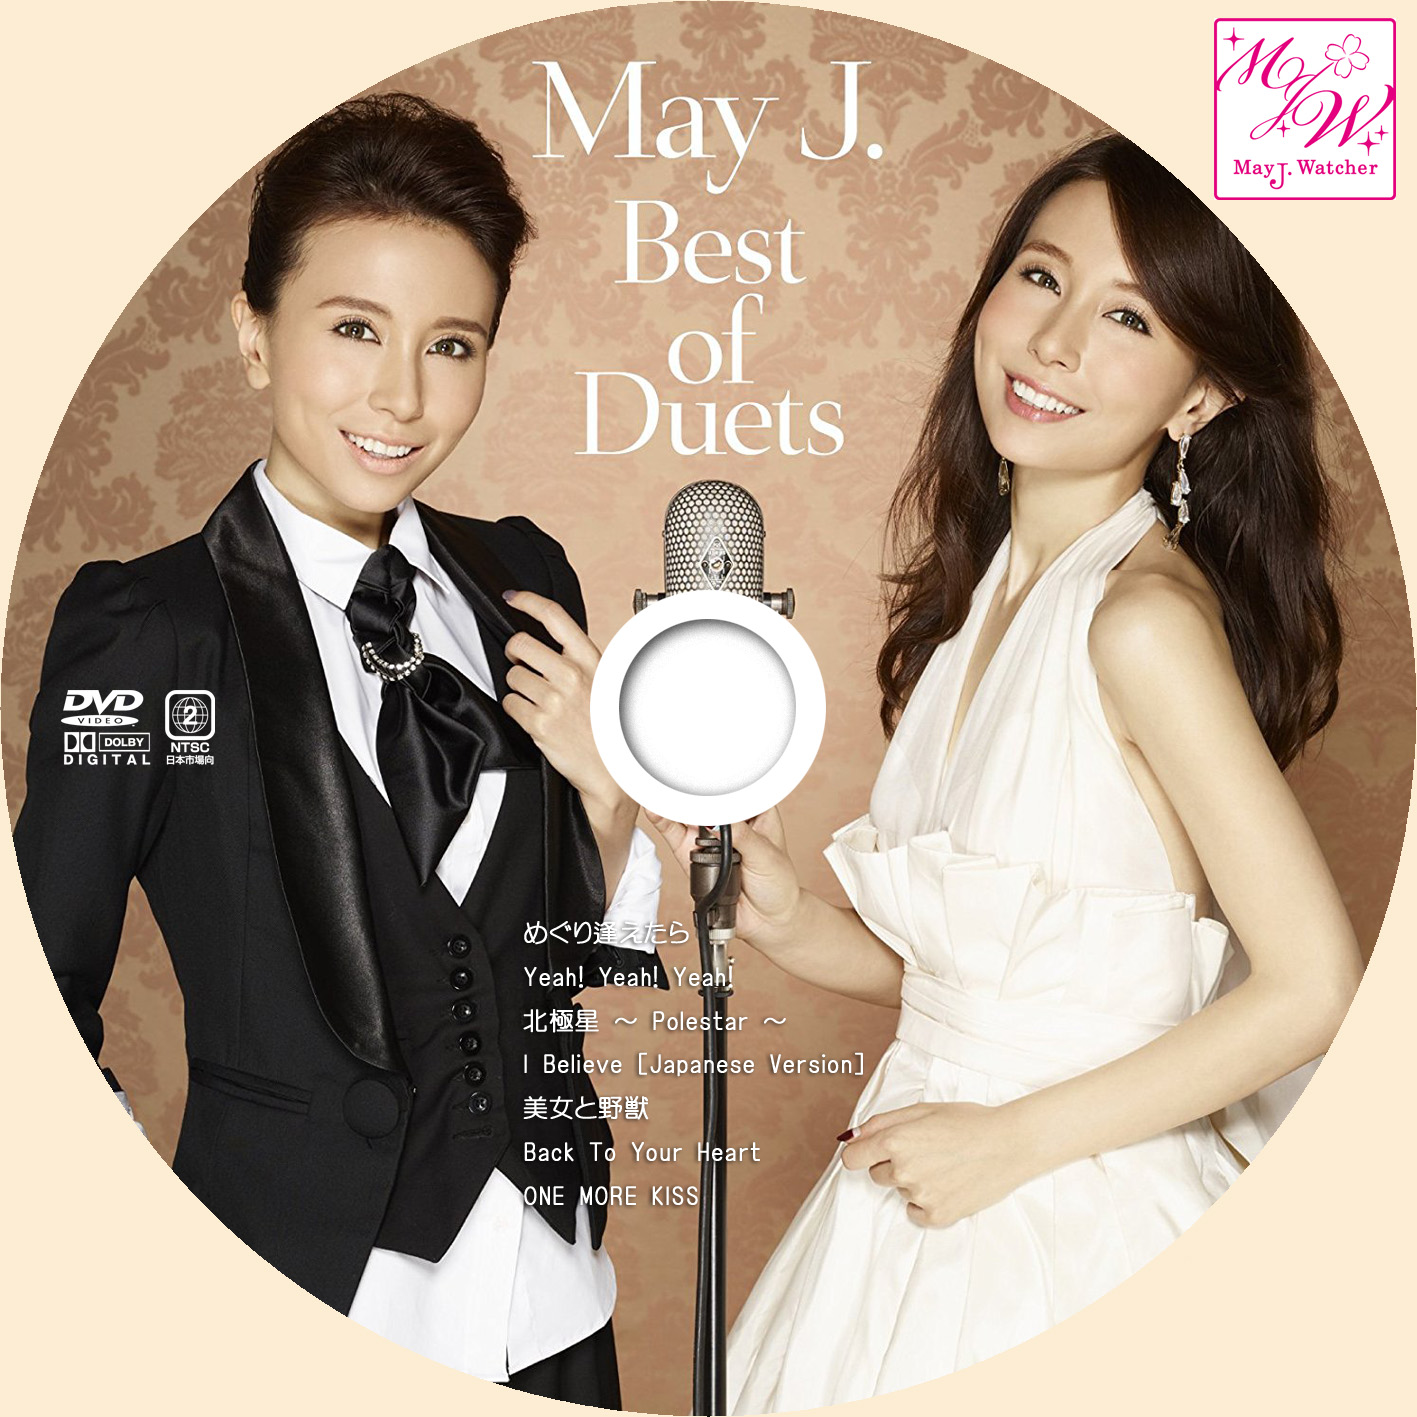 May J.Best of Duetsの収録曲とCDラベル紹介 | May J. Watcher